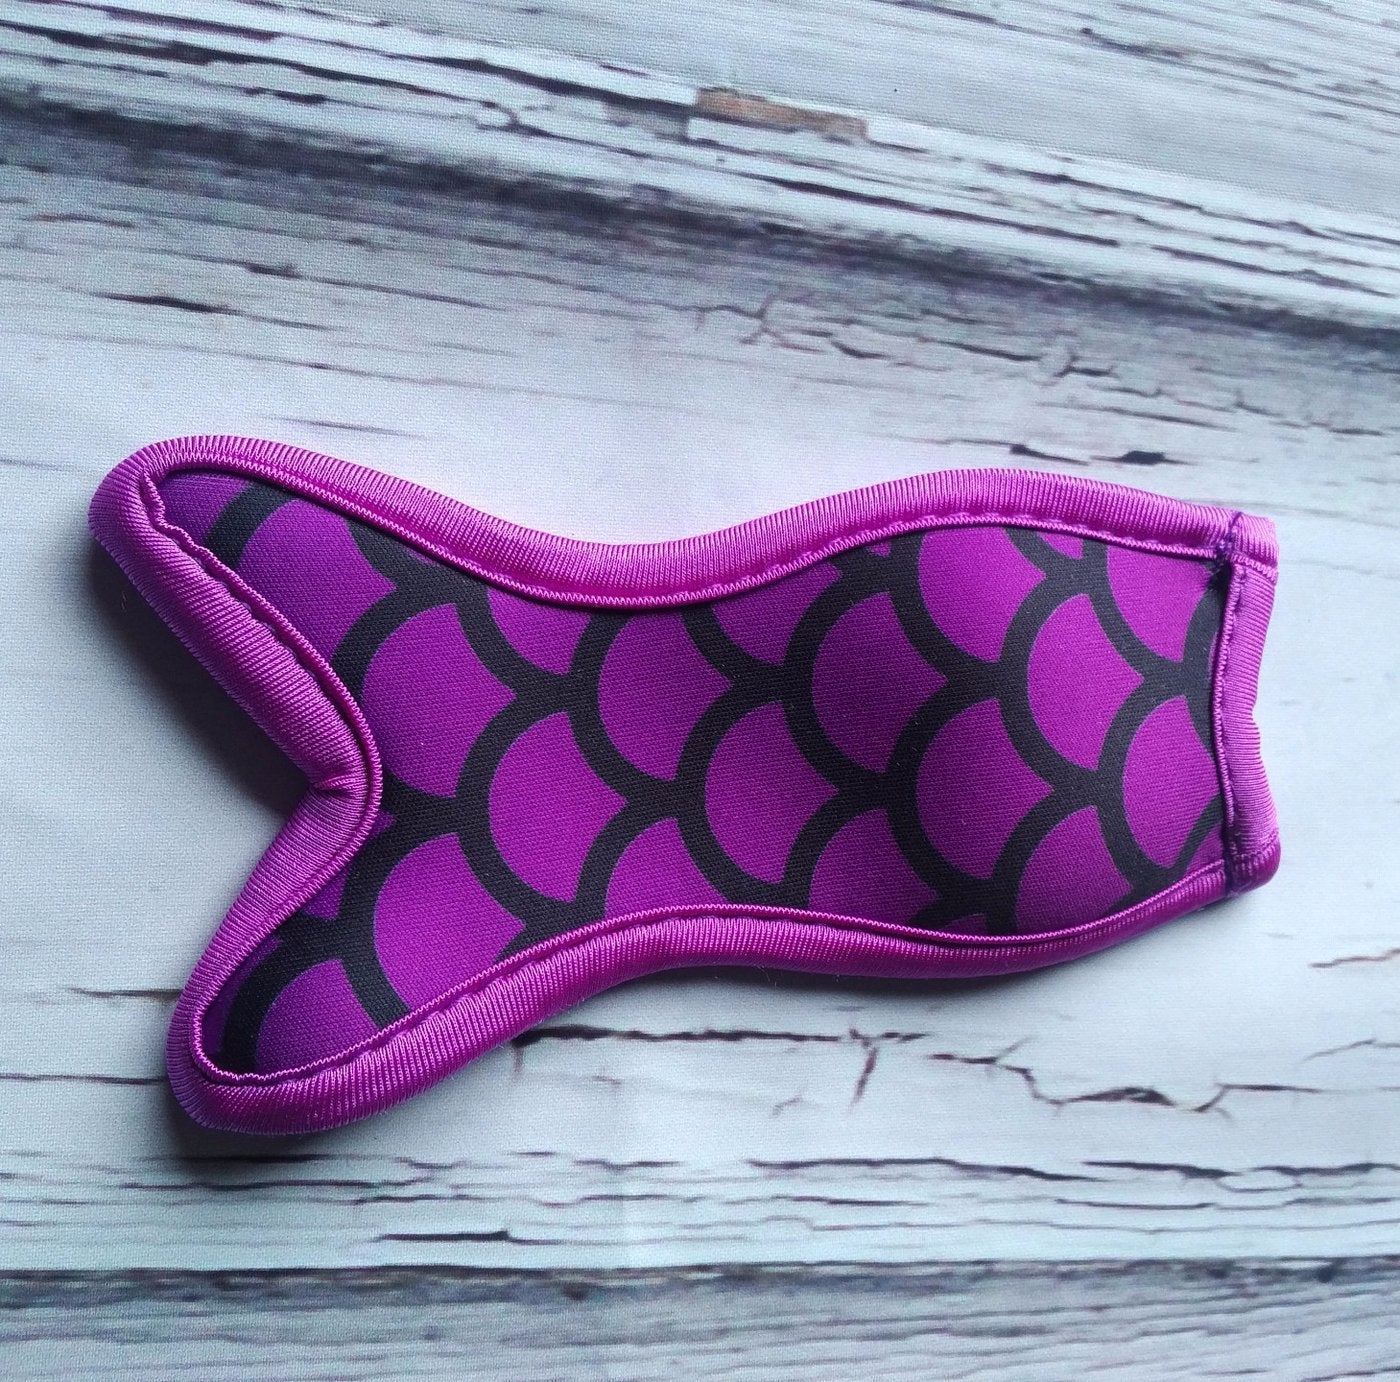 Freezie Cover - Mermaid - Purple with Black-Design Blanks